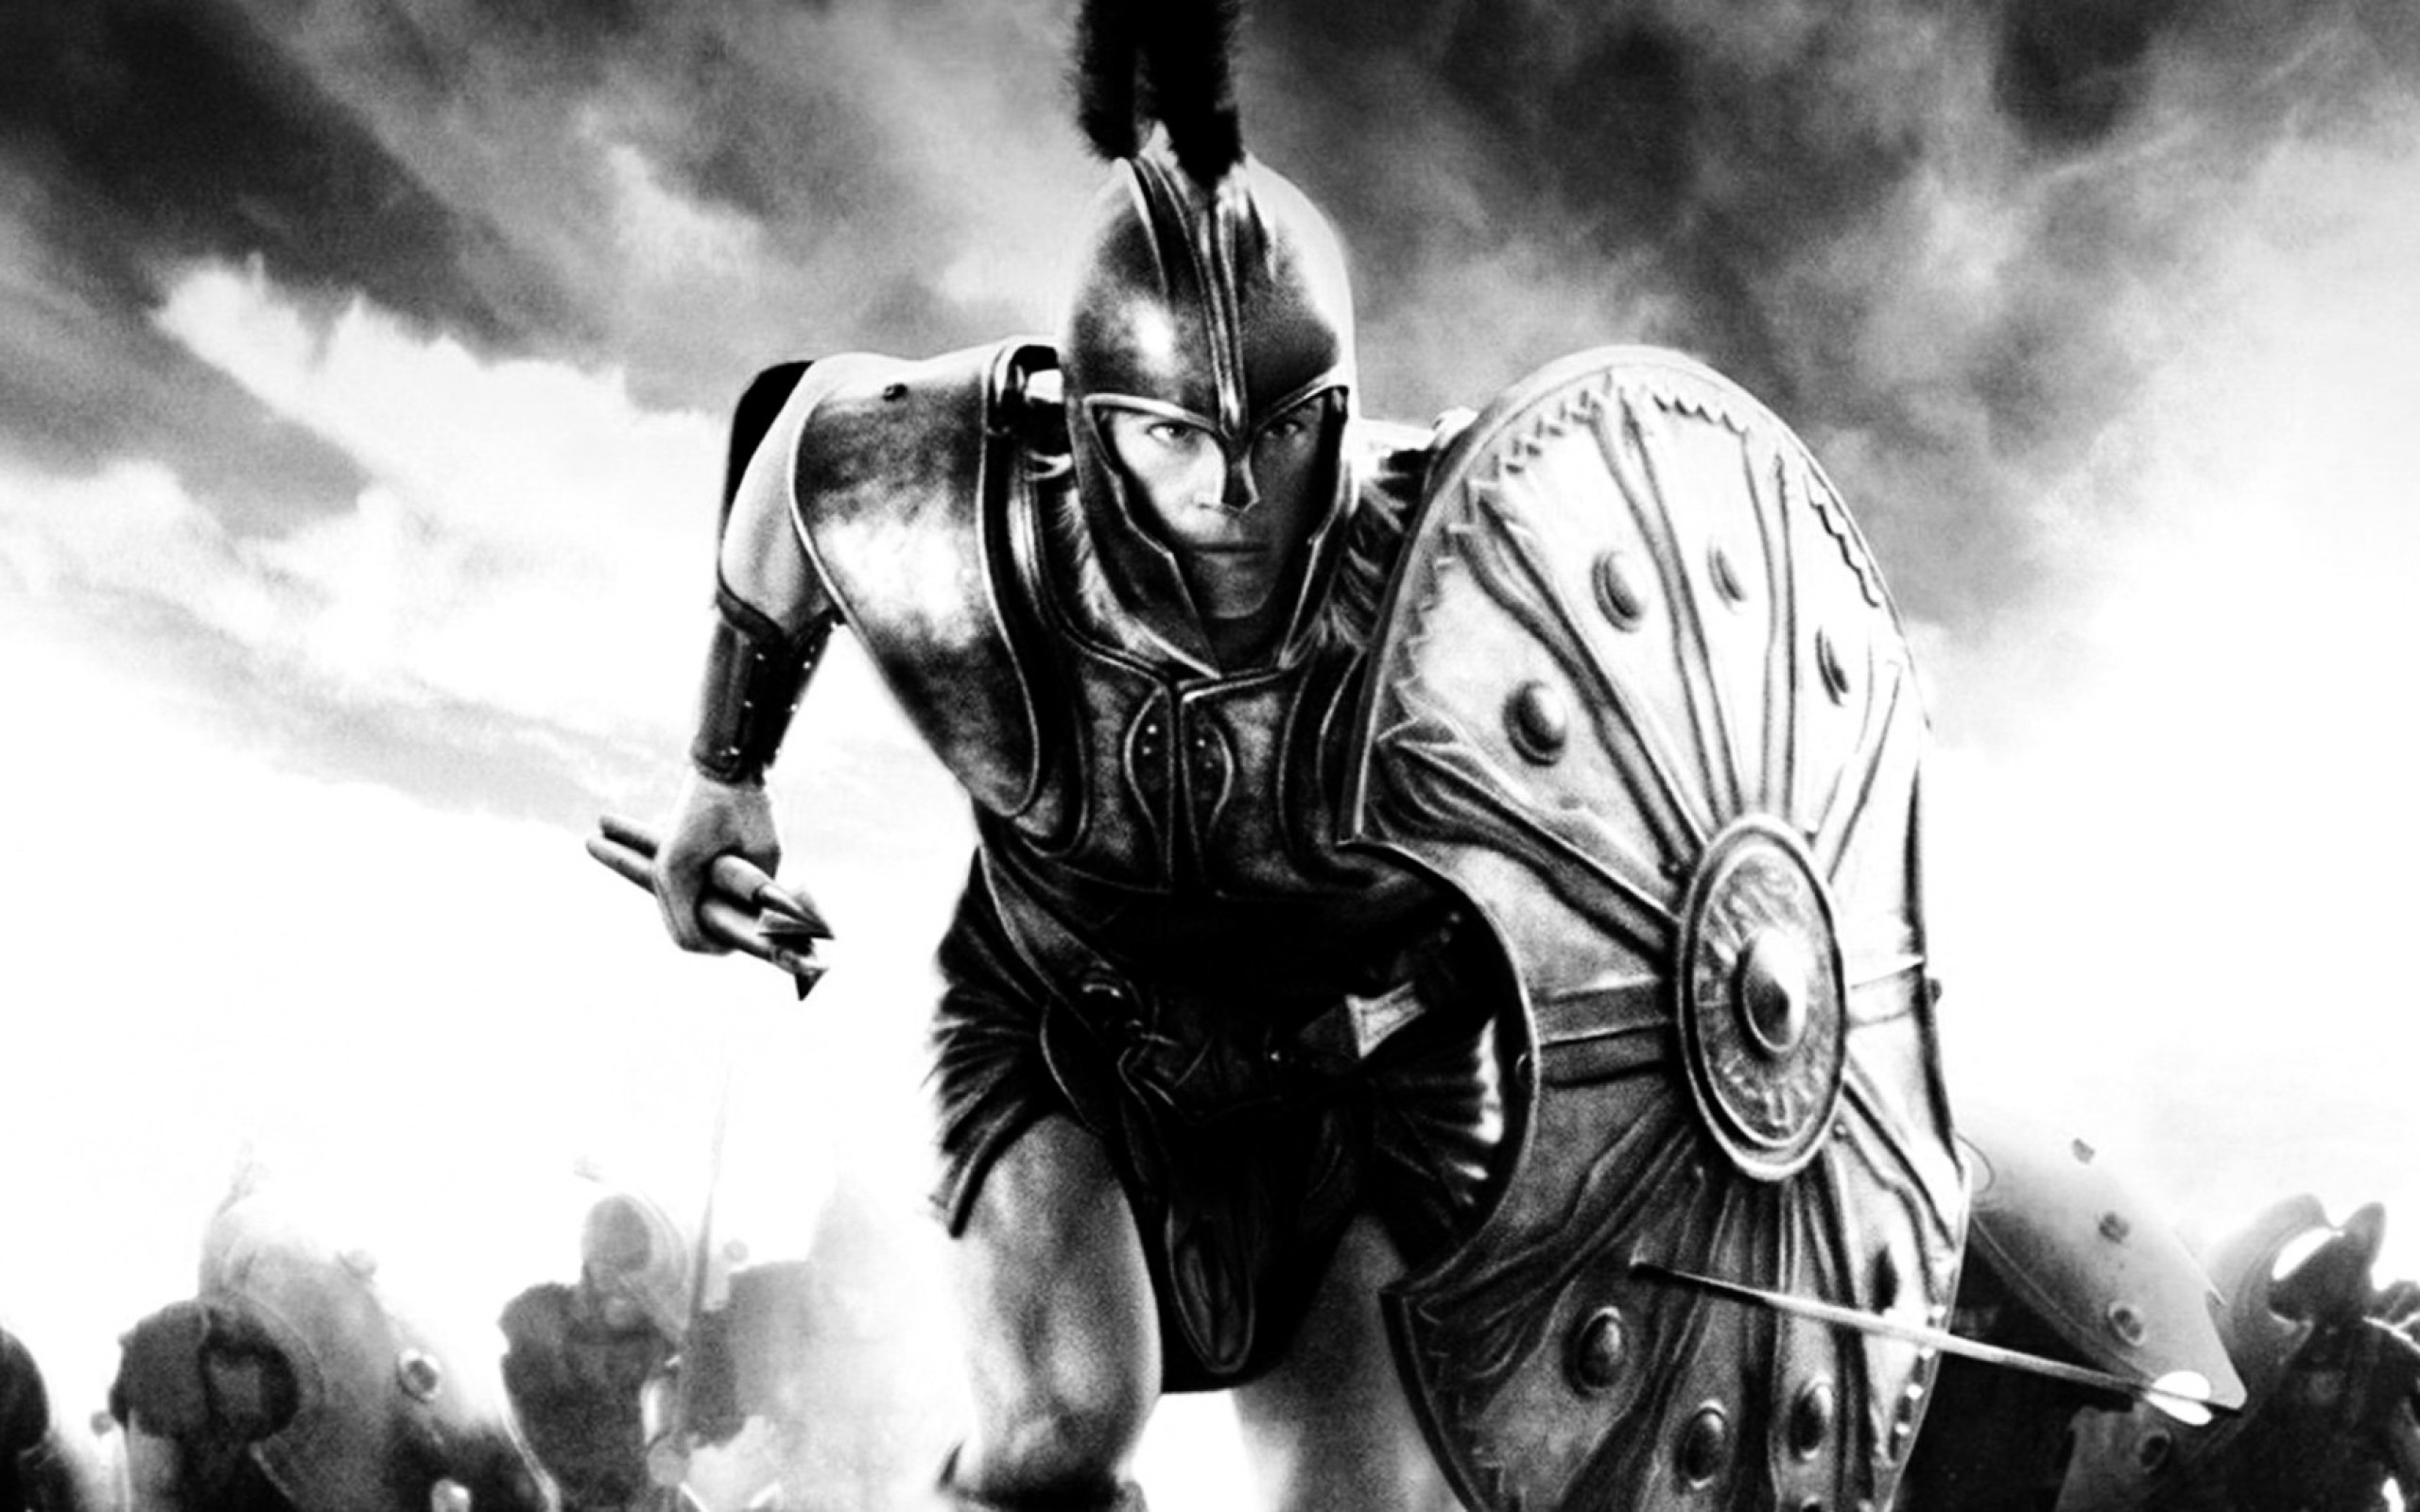 Ancient Greek Warrior Spartan Warrior Wallpapers